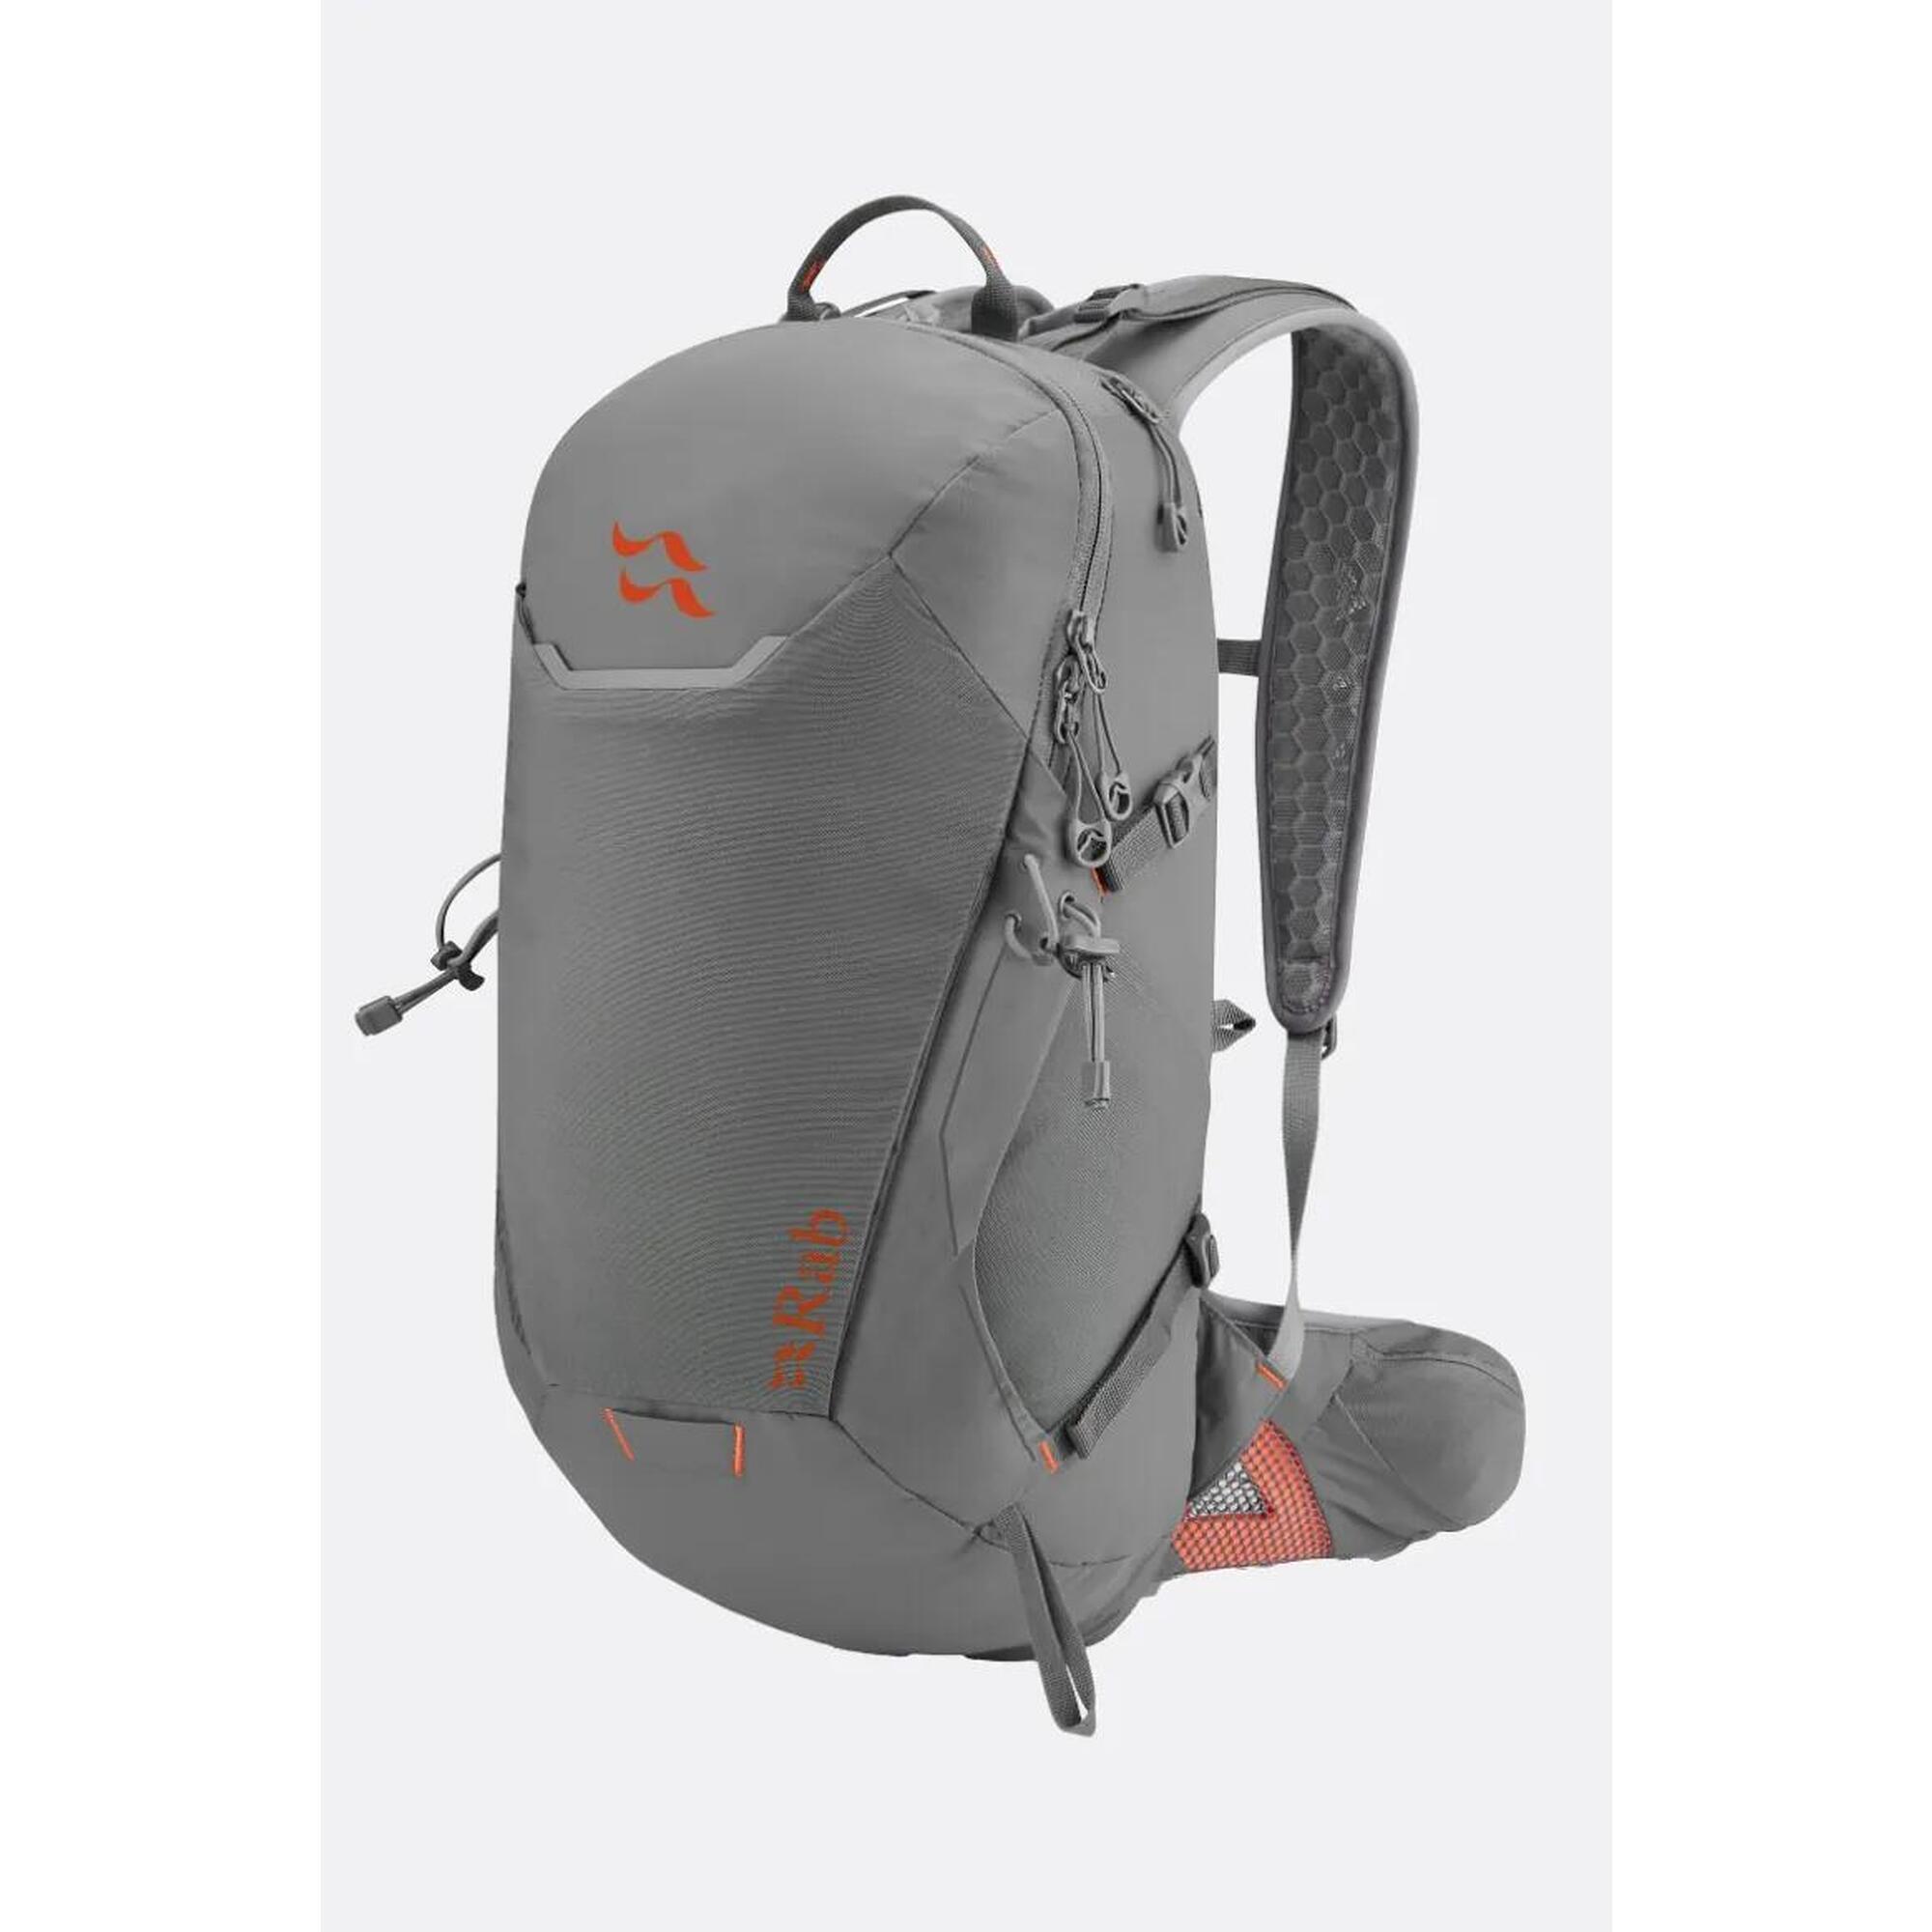 Aeon 20L Backpack - Light Grey